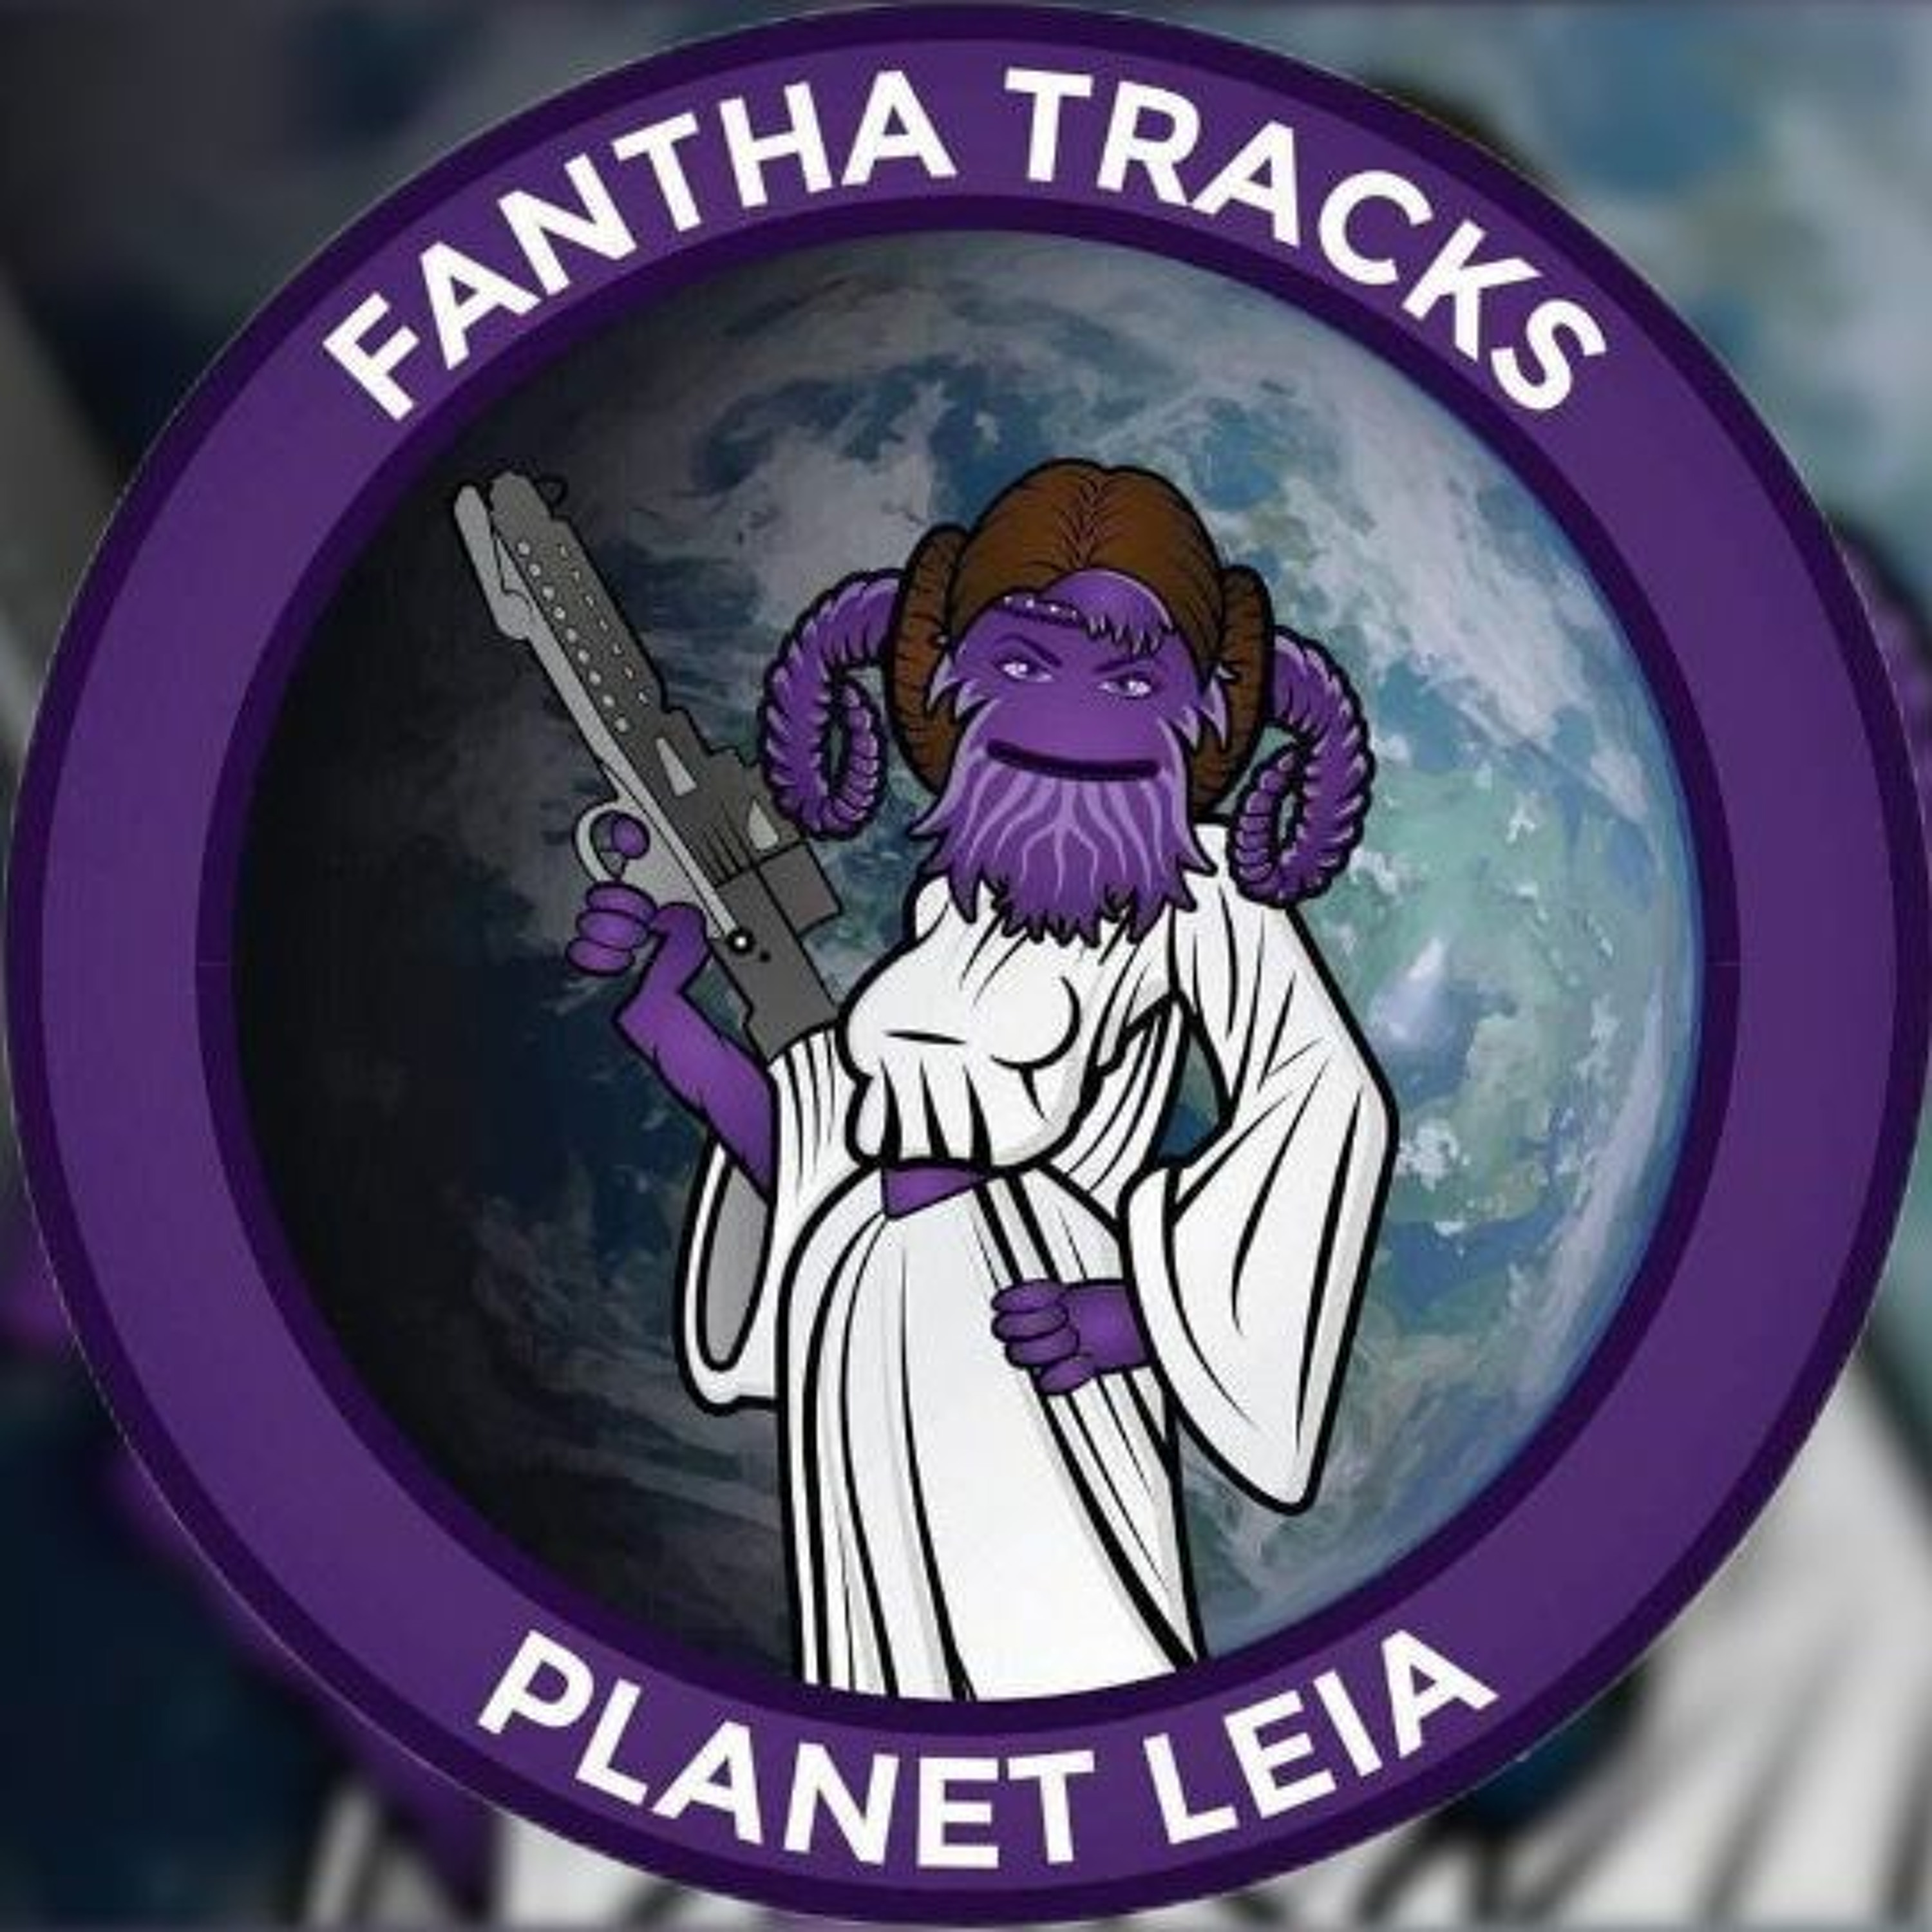 Planet Leia Episode 14: Victory Celebration